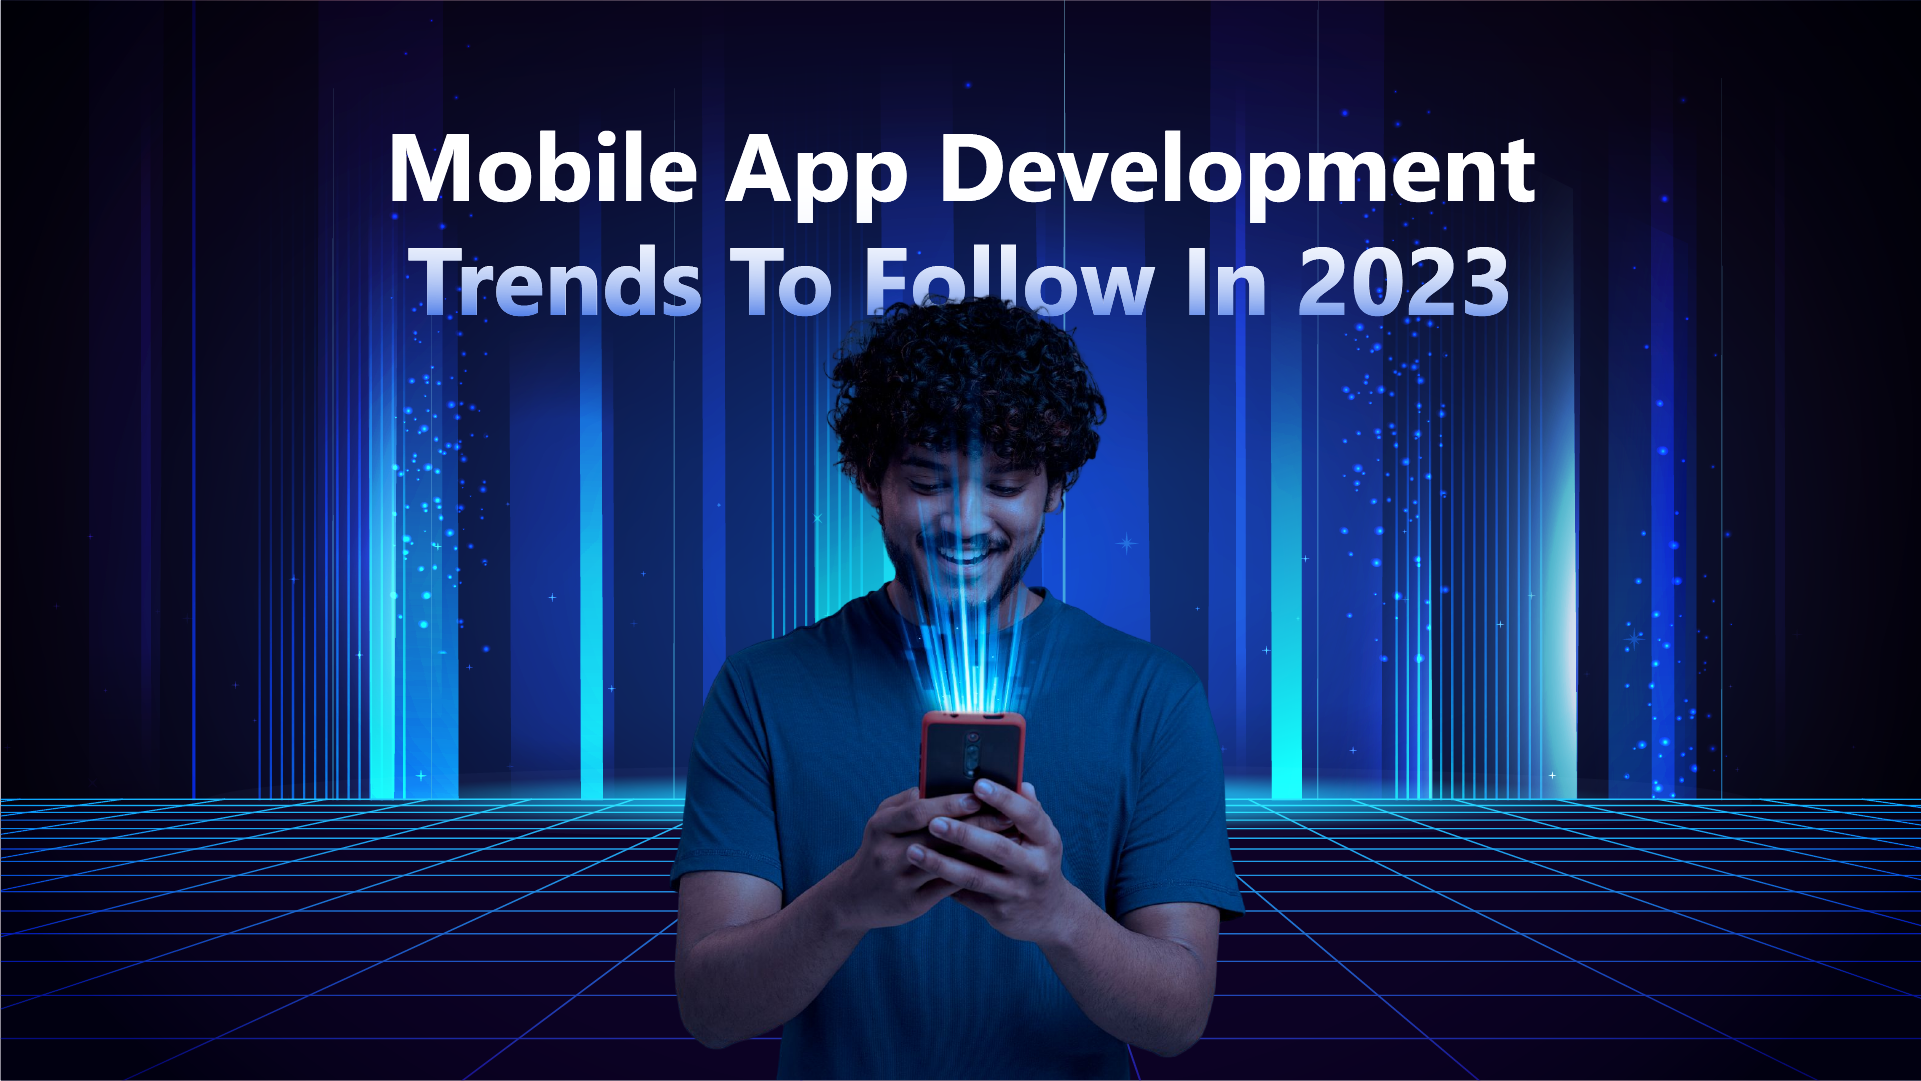 Mobile App Development Trends To Follow In 2023